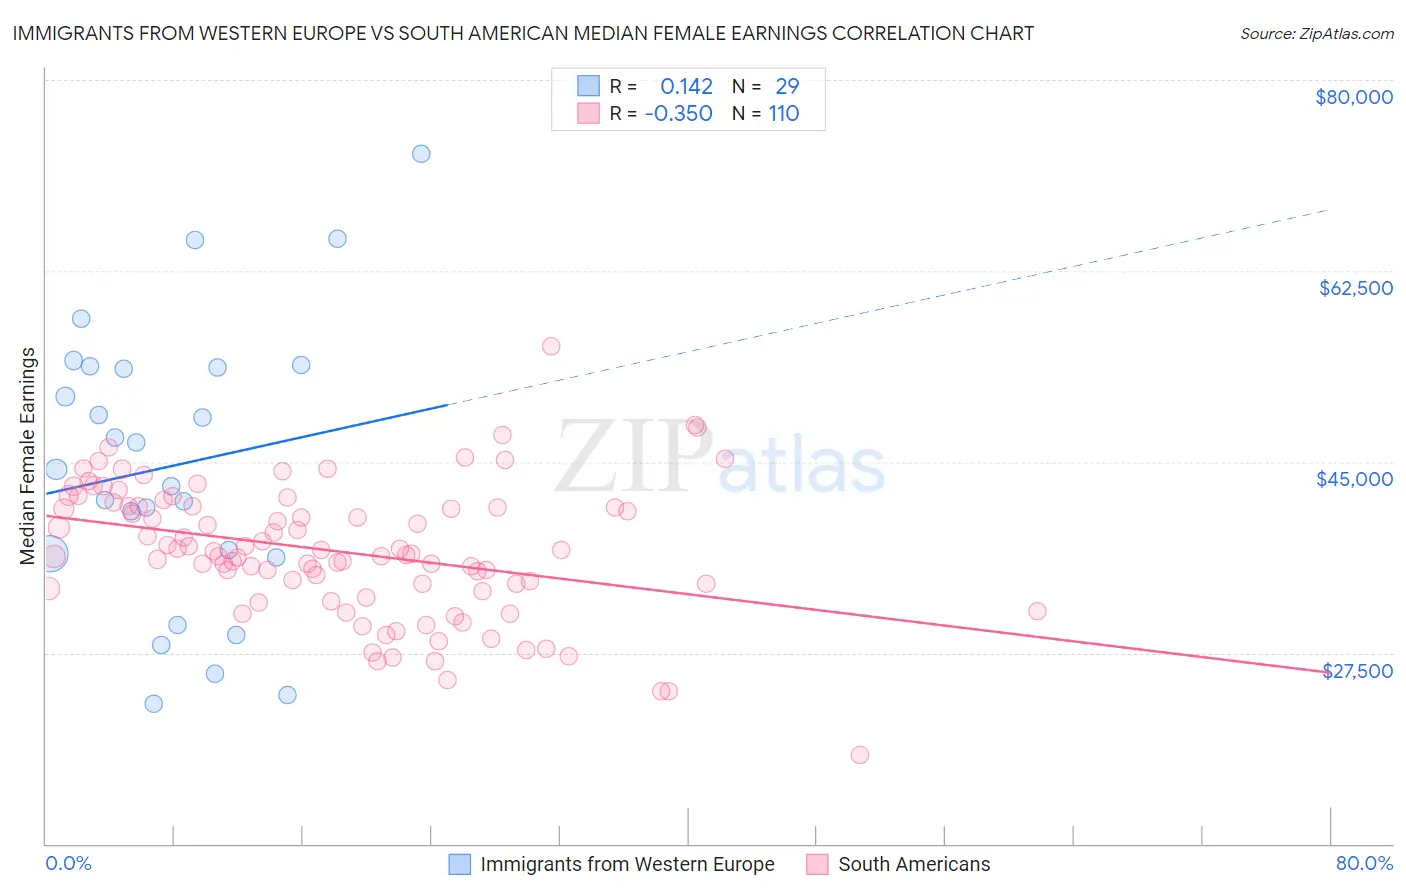 Immigrants from Western Europe vs South American Median Female Earnings